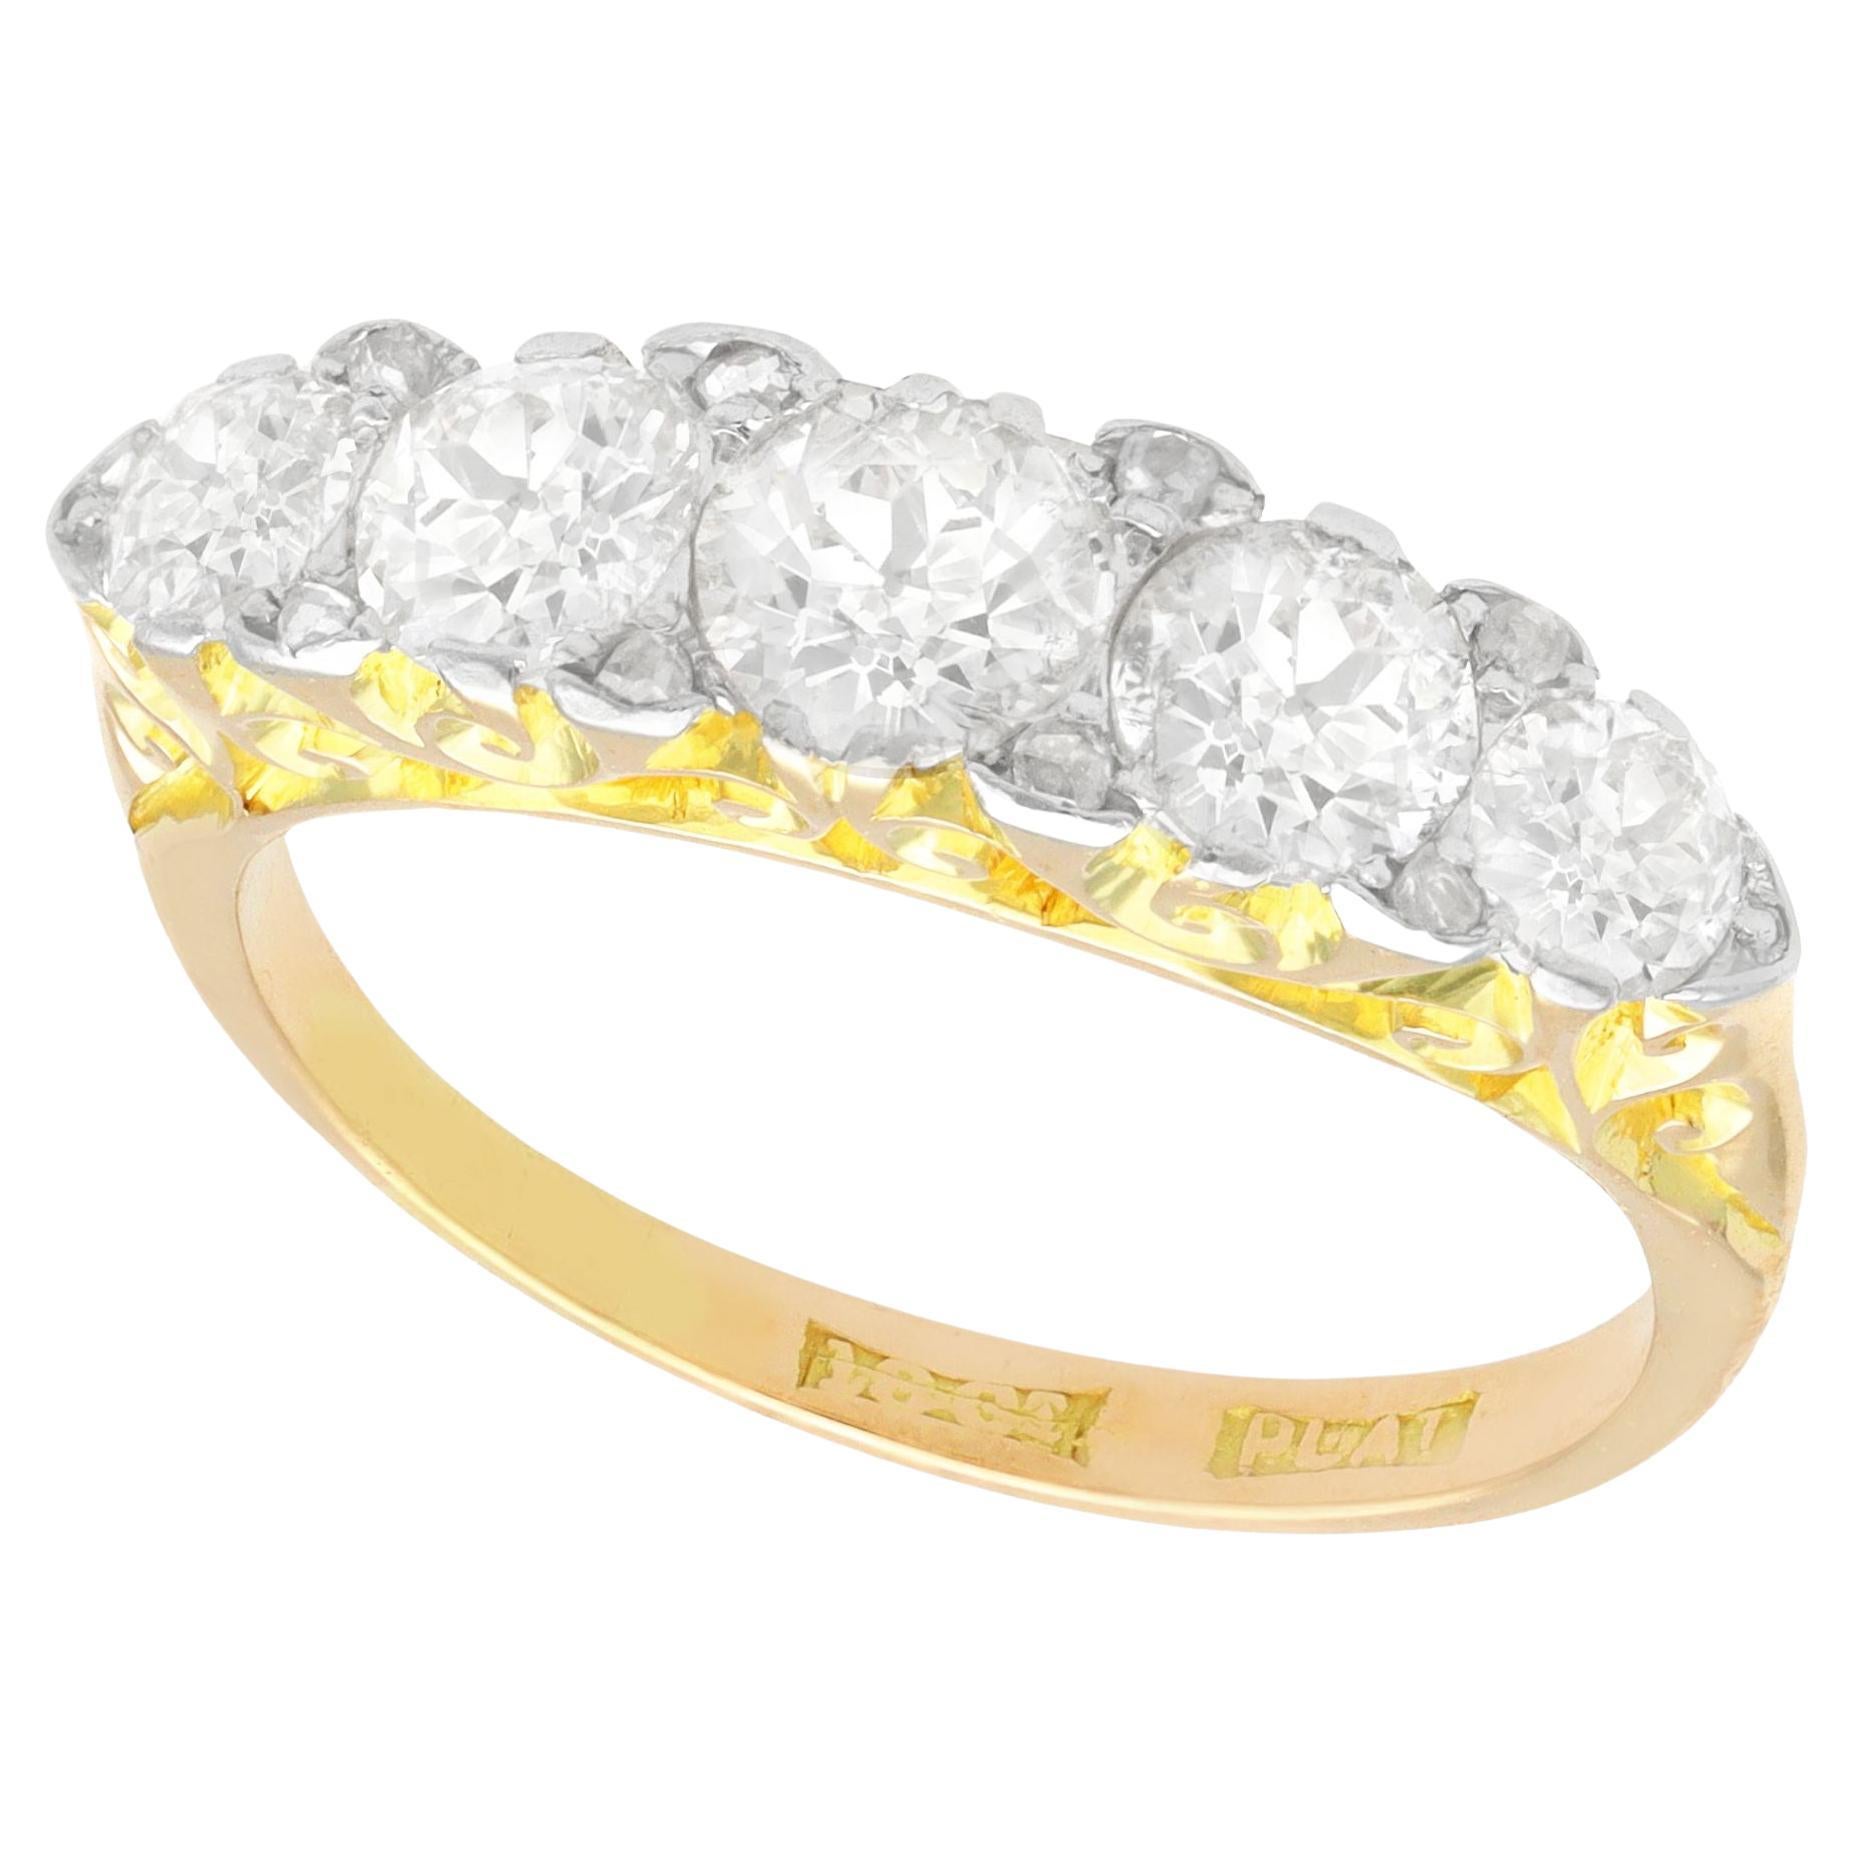 Antique 1.83 Carat Diamond and Yellow Gold Engagement Ring, circa 1910